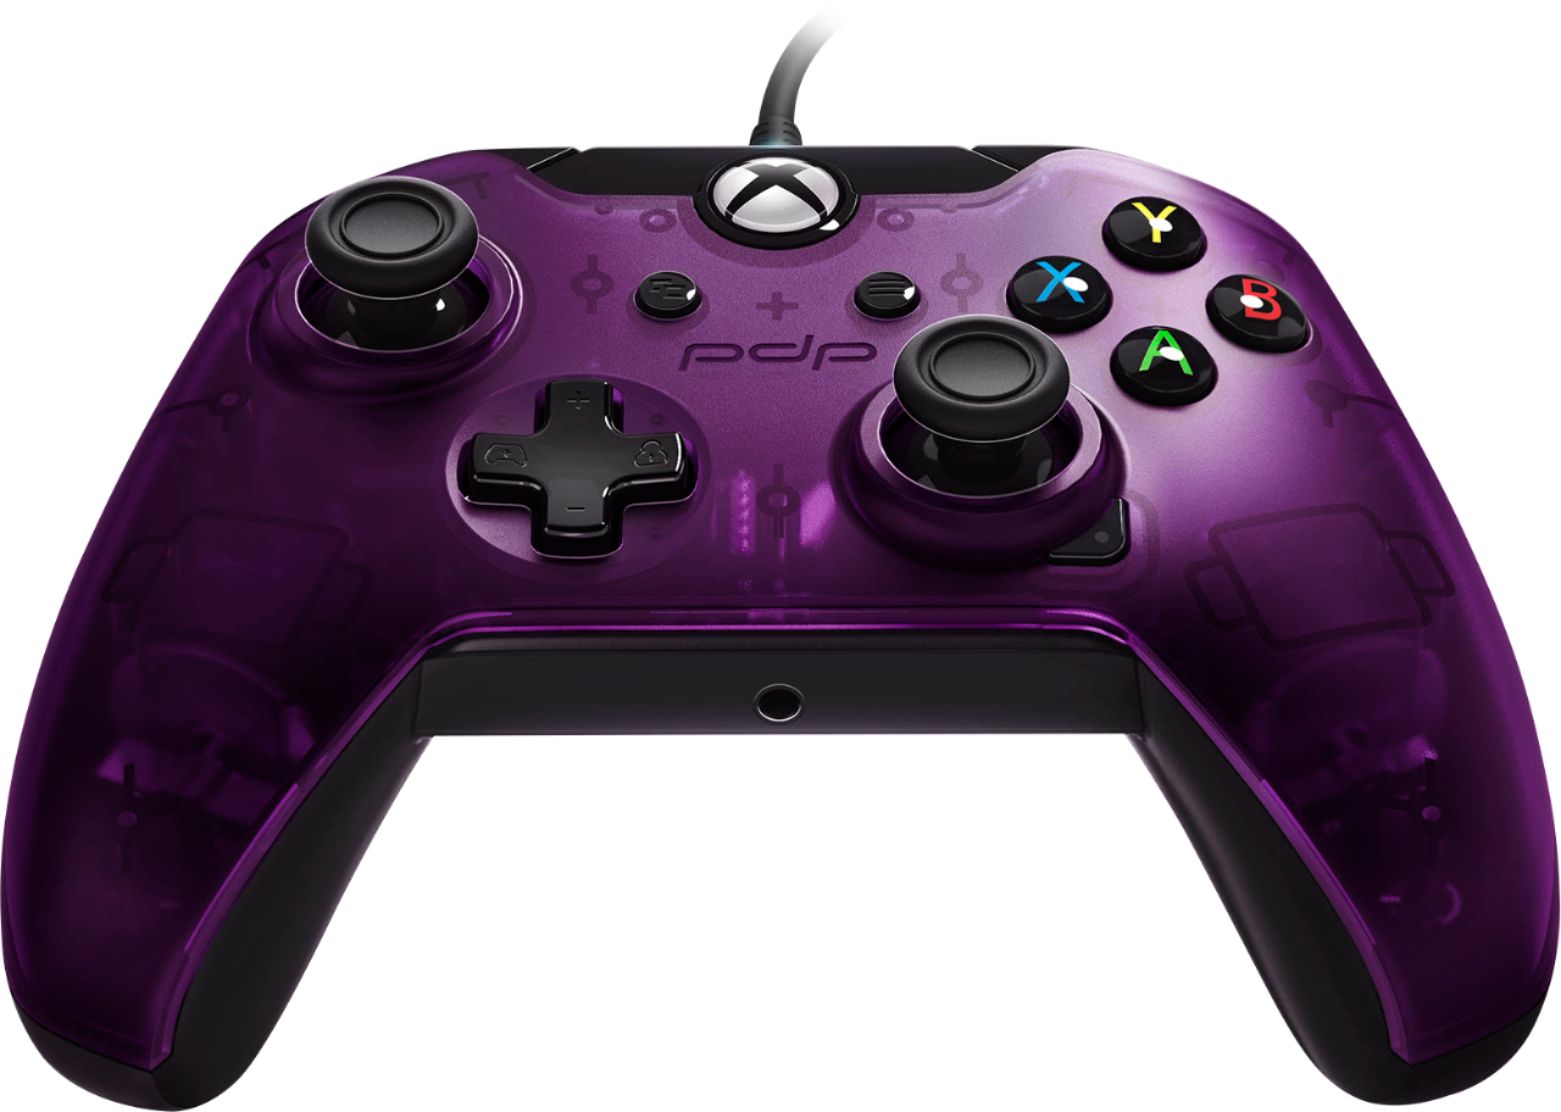 xbox one s purple edition